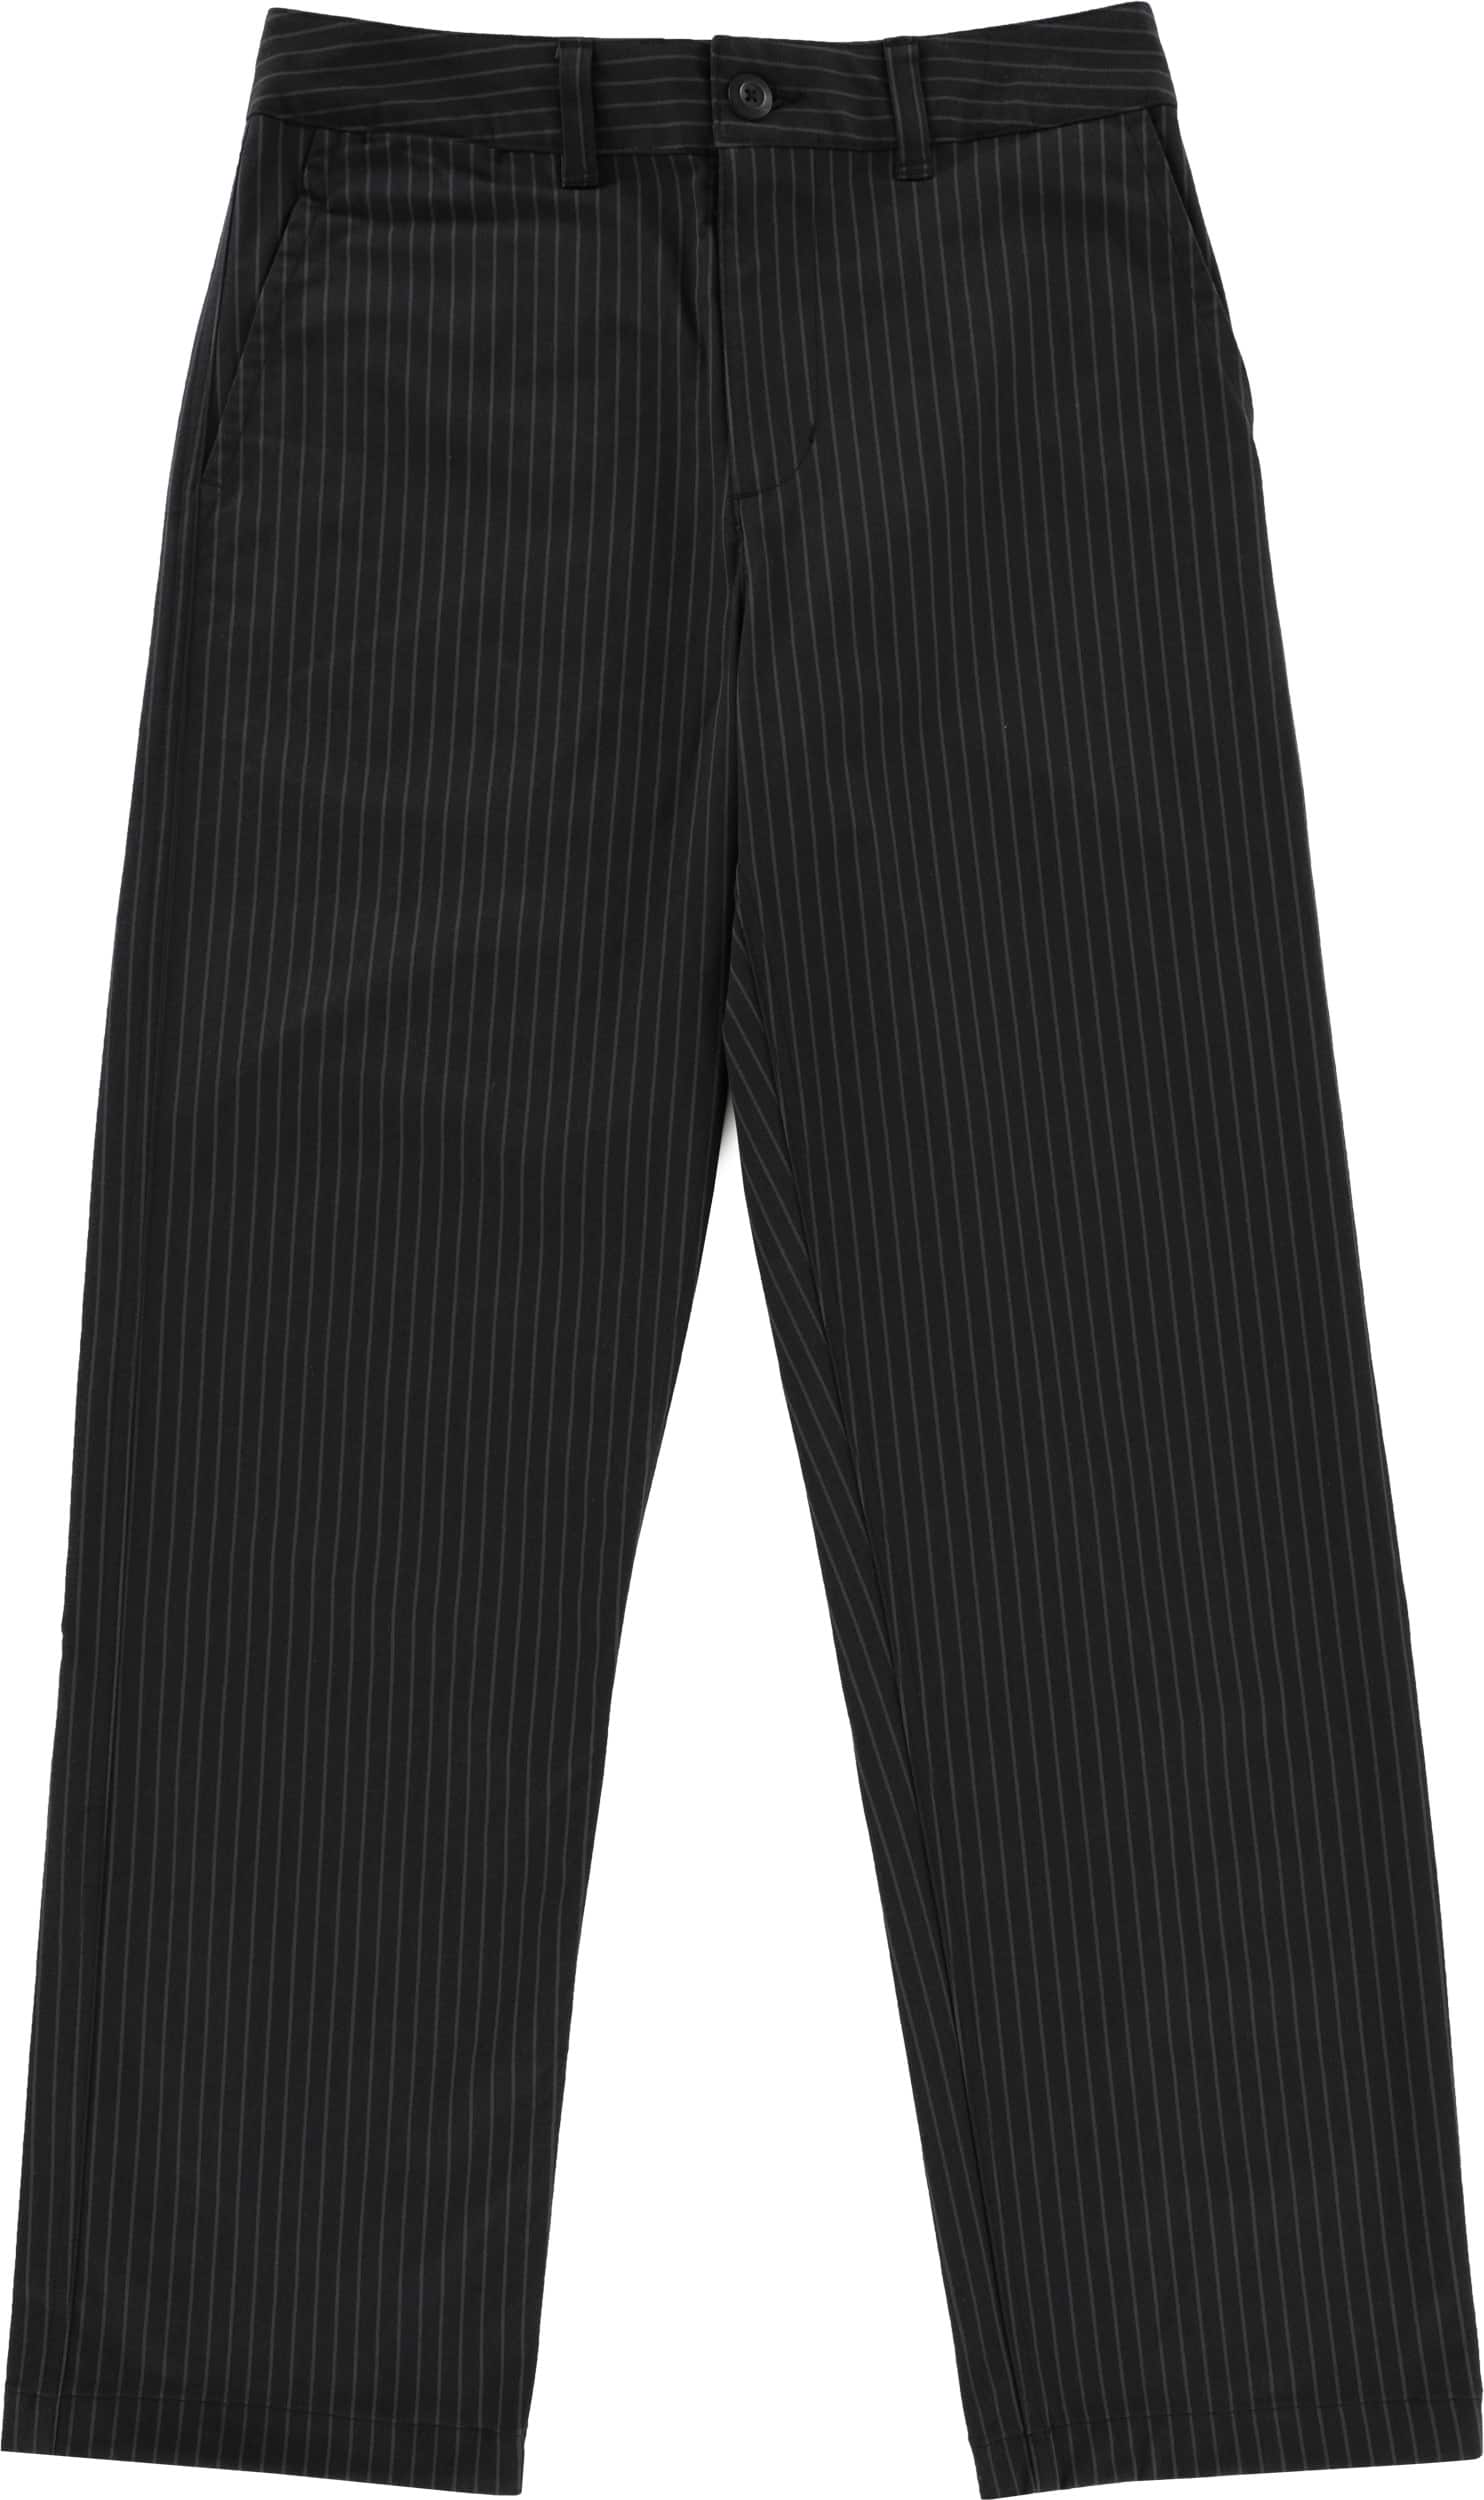 Nike SB DF Novelty Chino Pants - black | Tactics